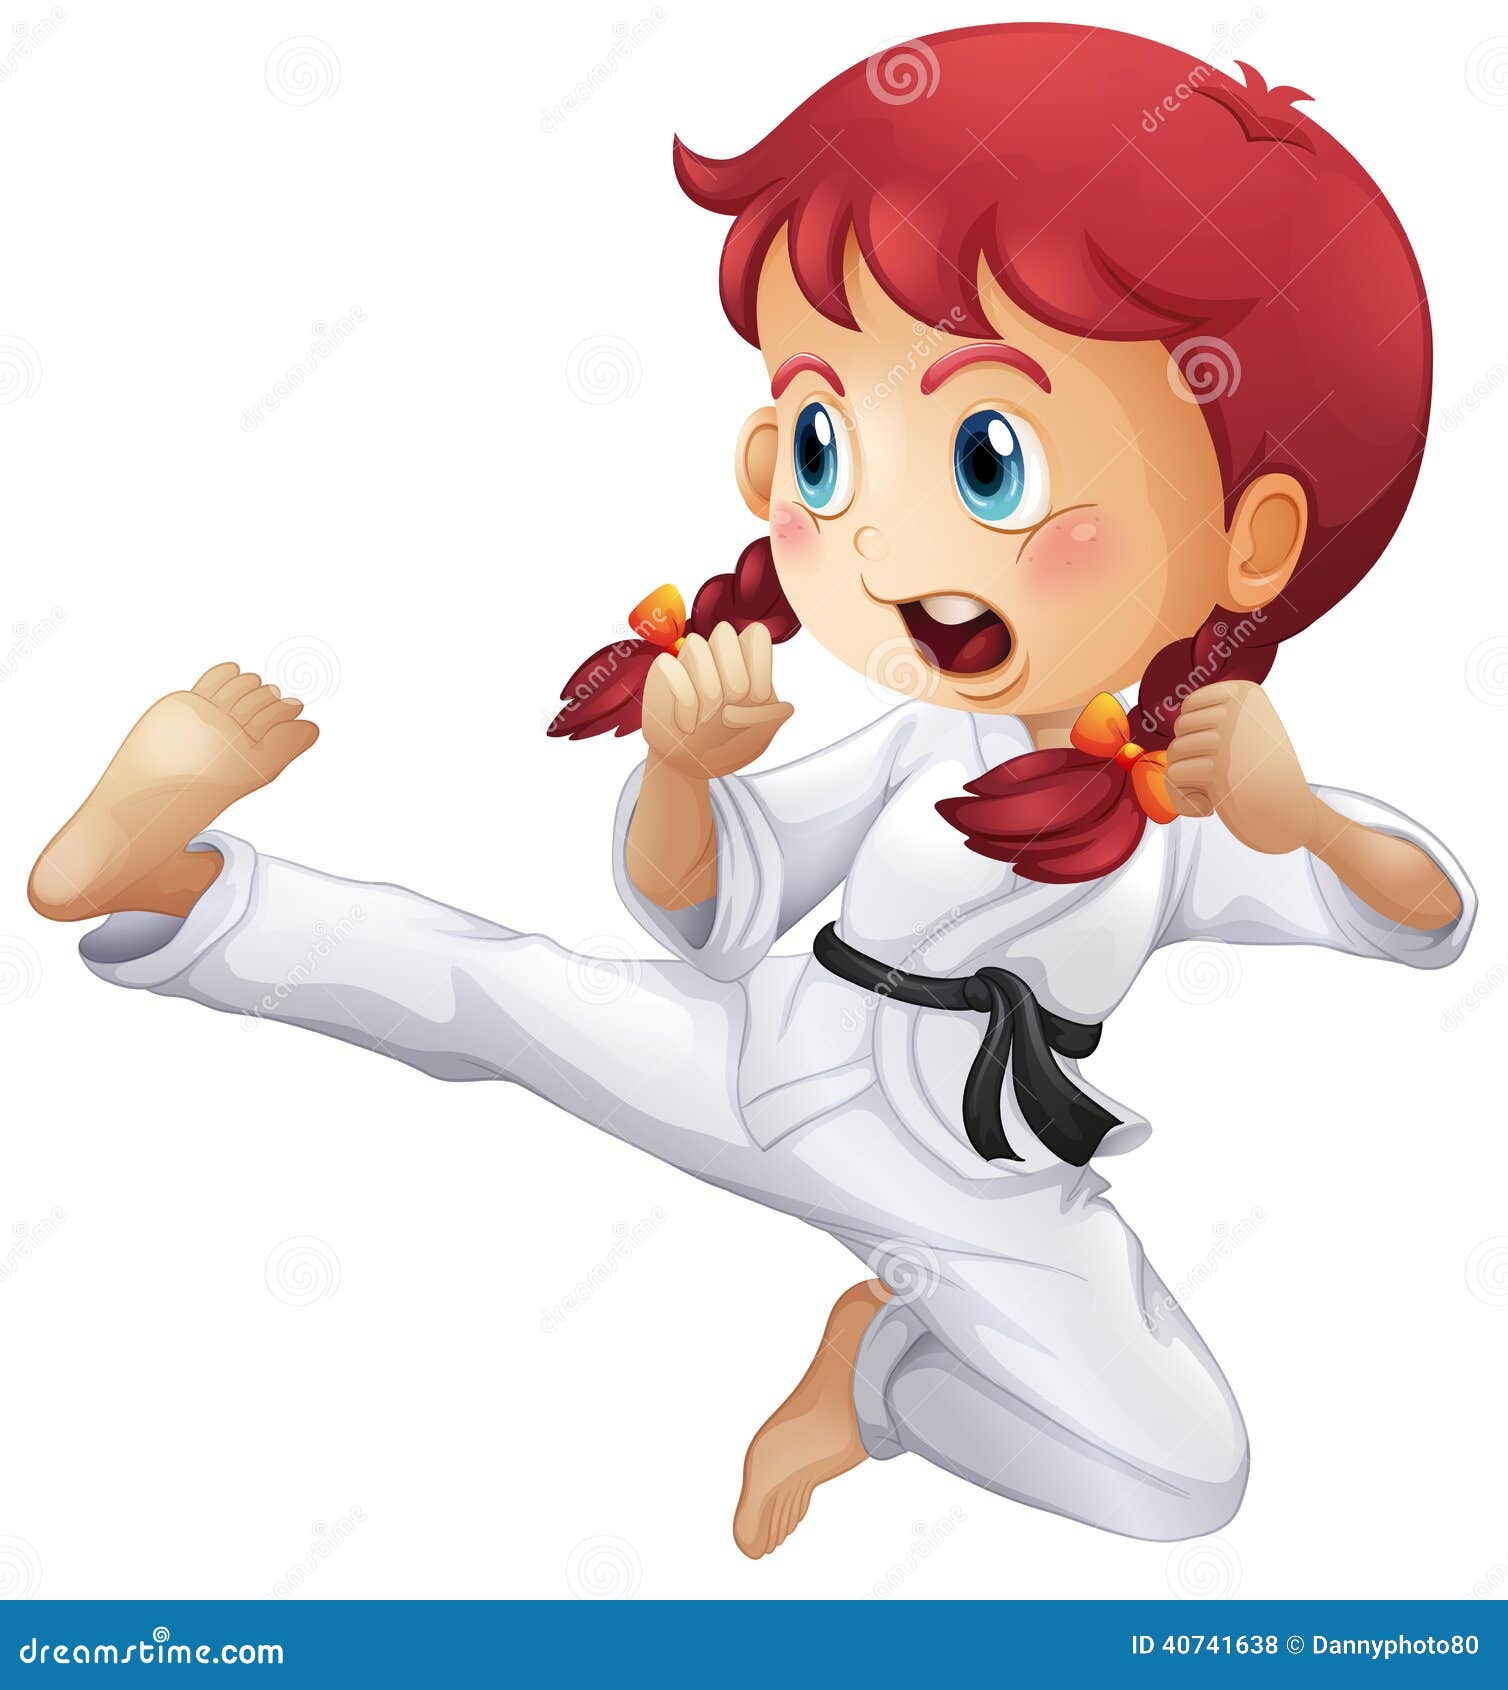 clip art karate girl - photo #43